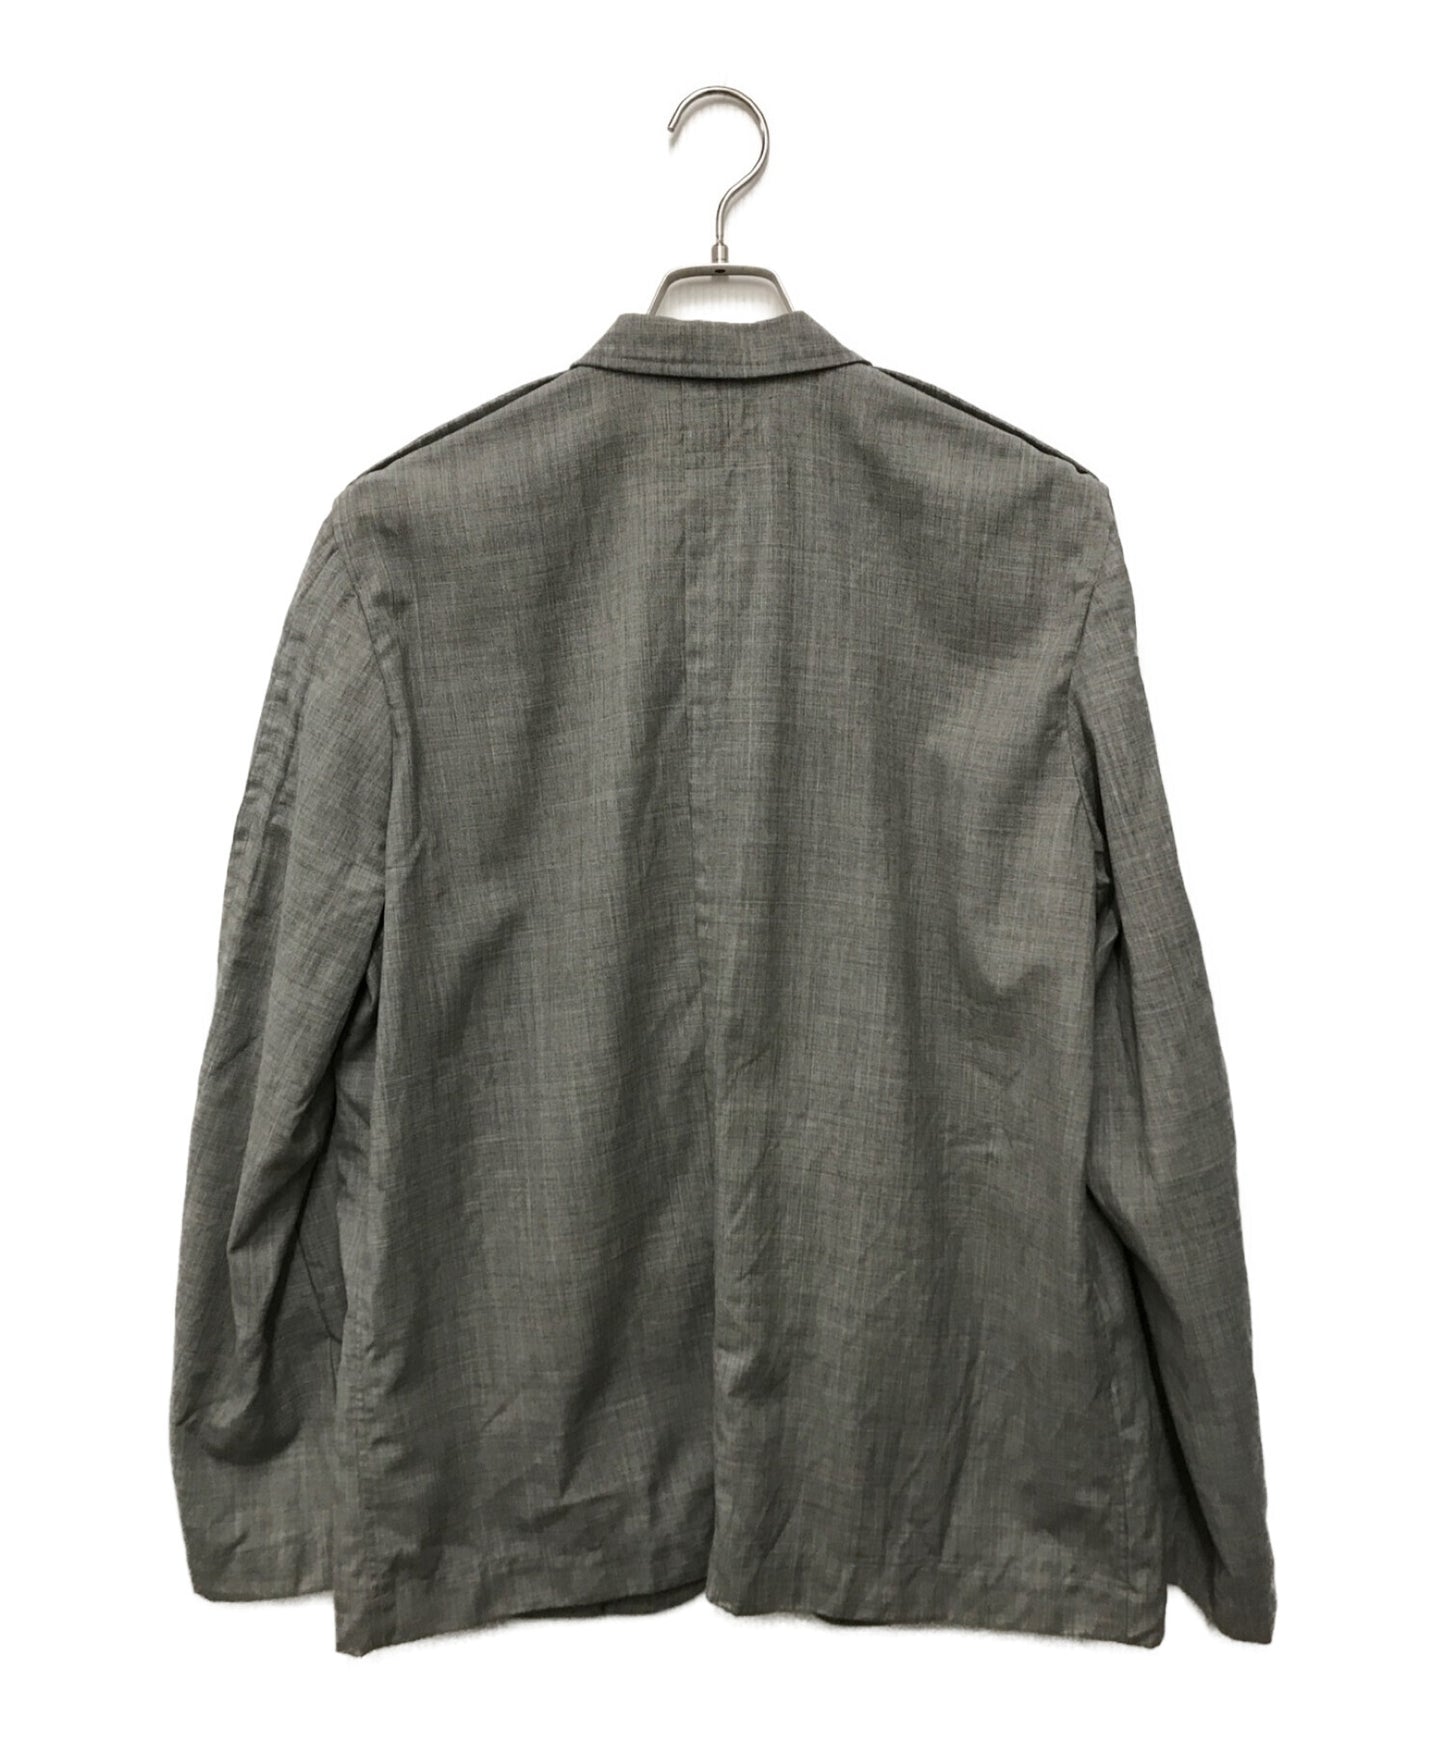 Comme des Garcons 셔츠 리브 베드 셔츠 재킷 양모 셔츠되지 않은 재킷